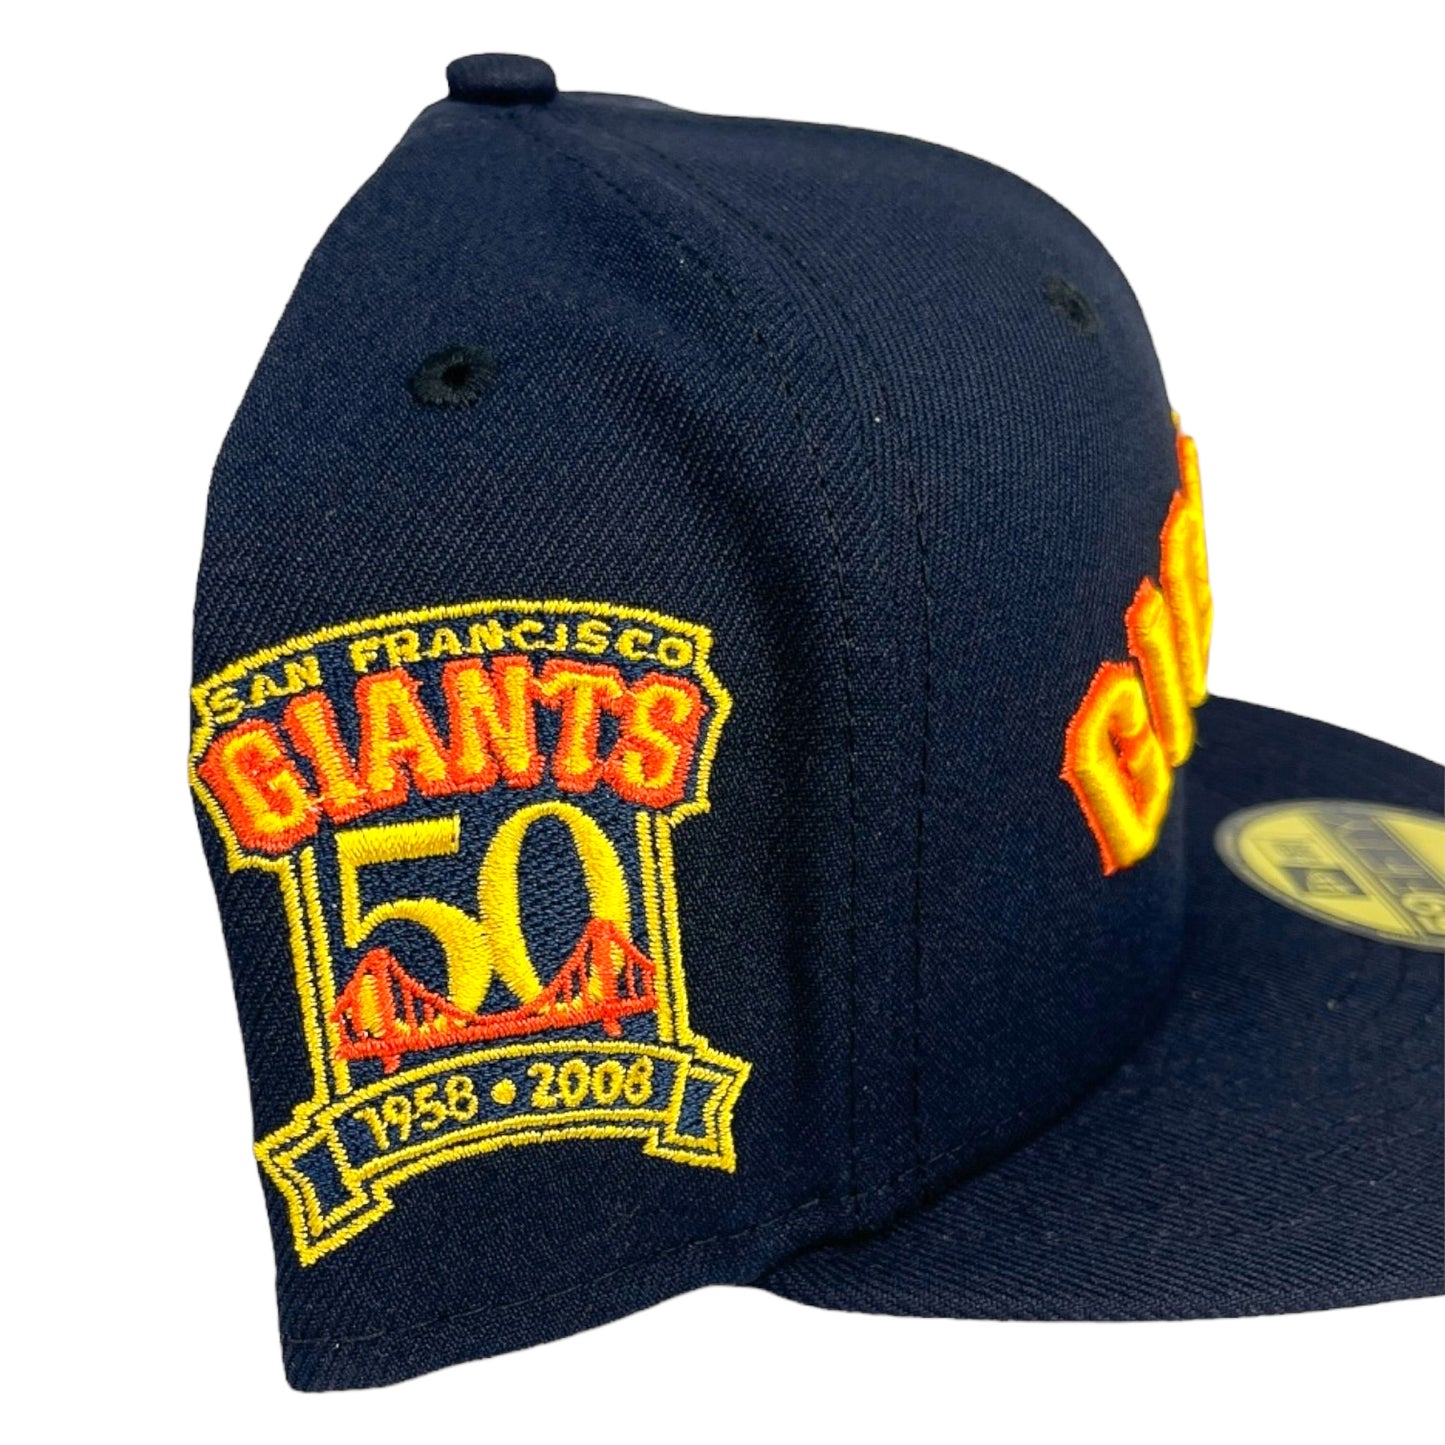 New Era San Francisco Giants 50th Anniversary "Gigantes" - Navy/Yellow